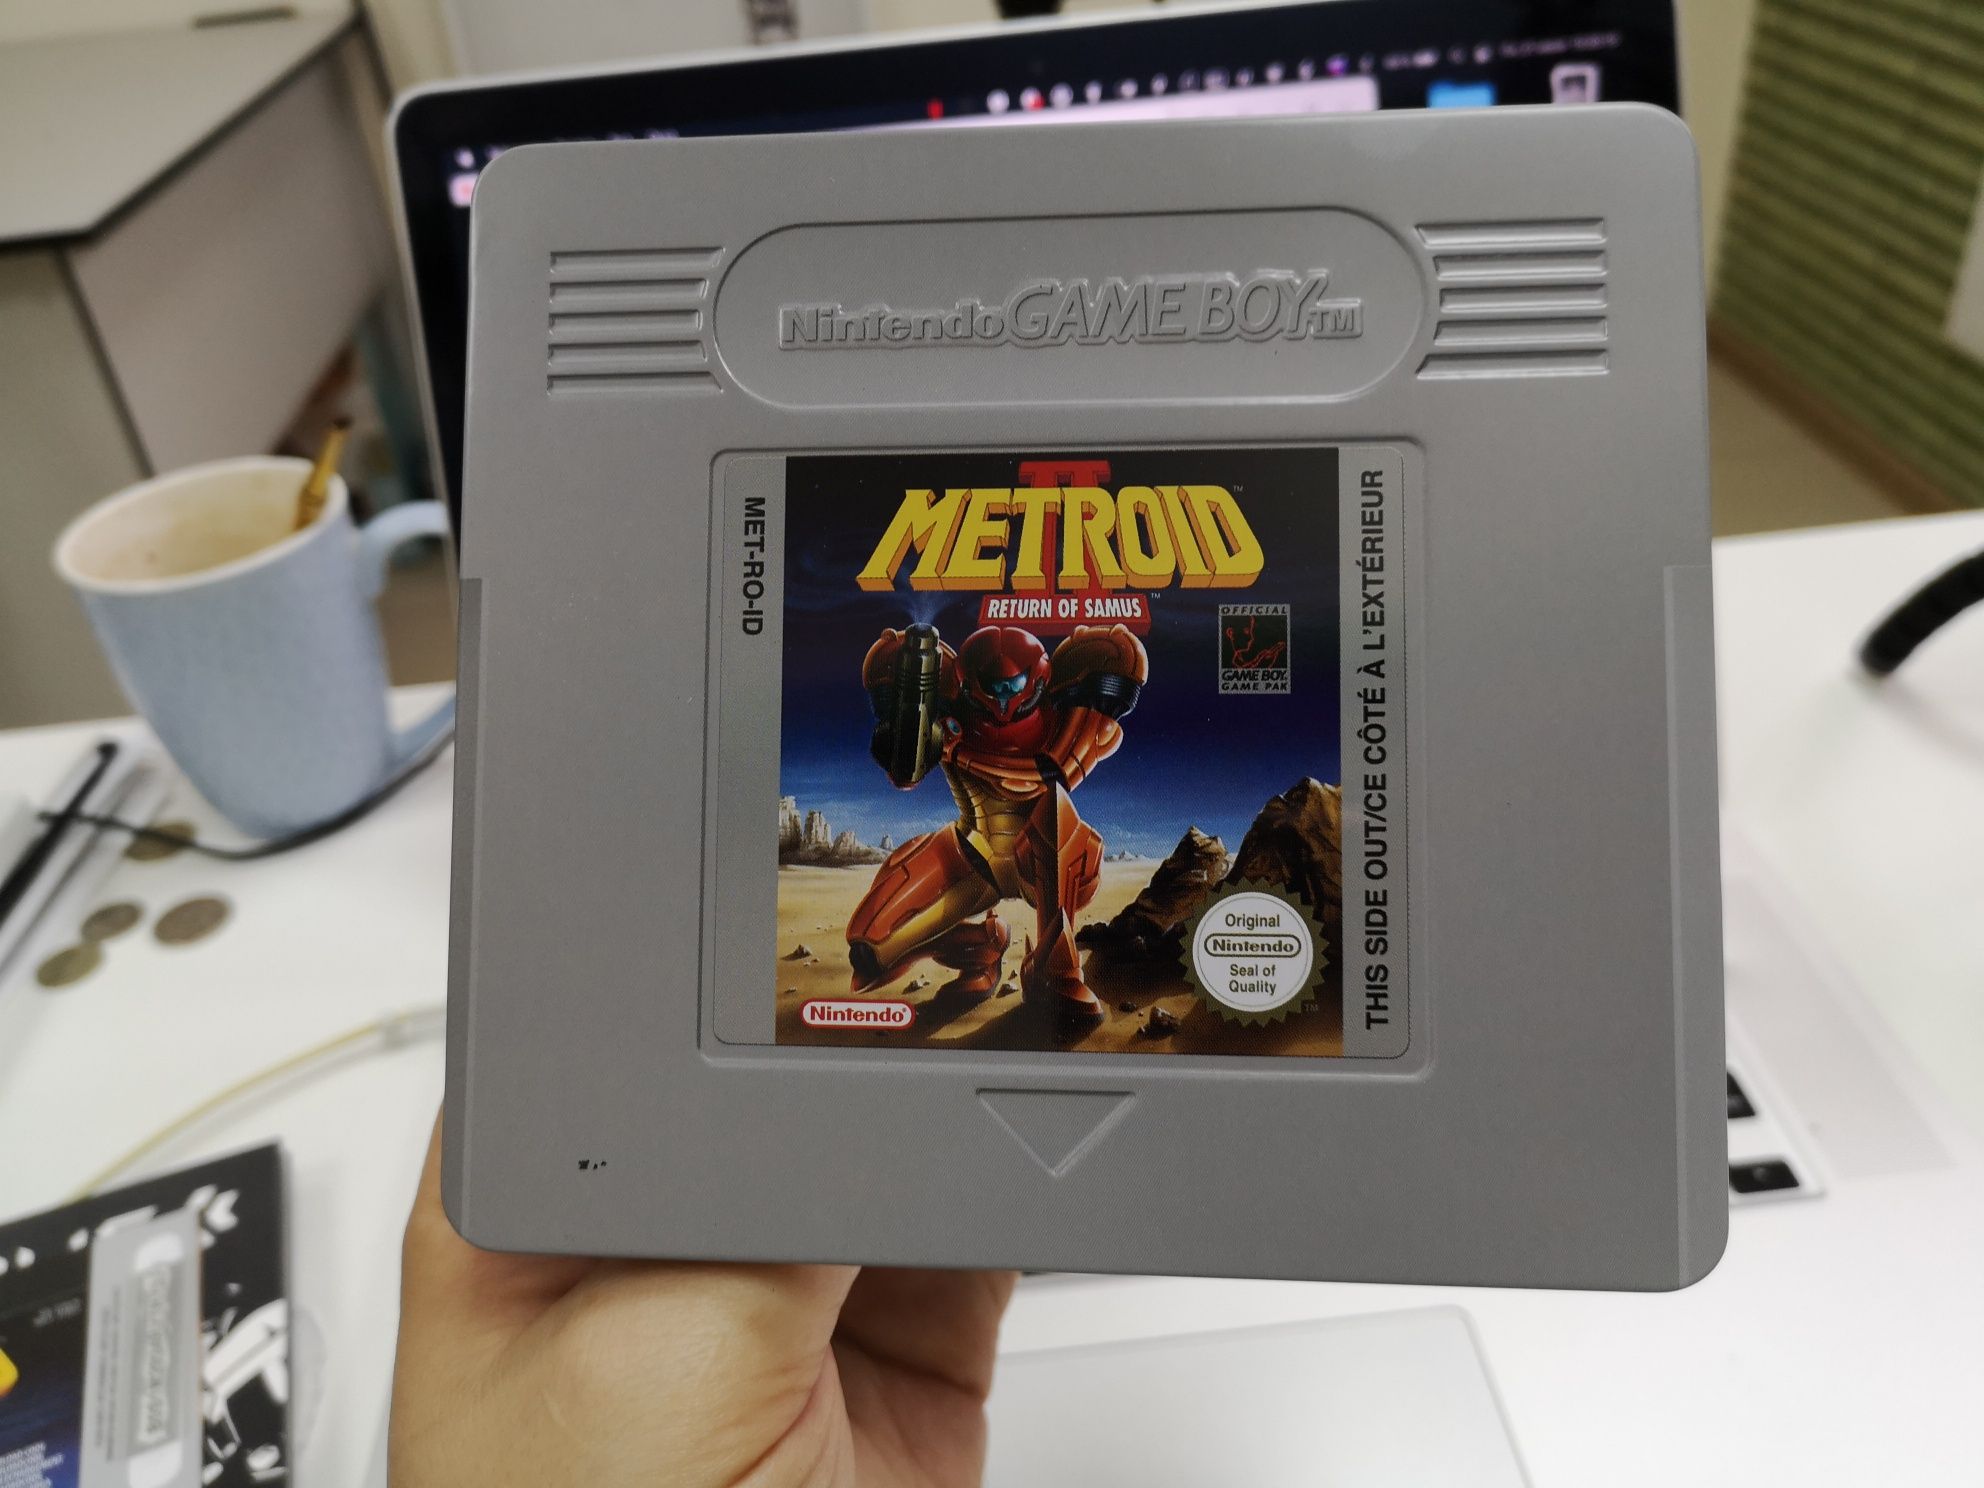 Metroid Samus returns Legacy Edition Limited-Nintendo 3ds